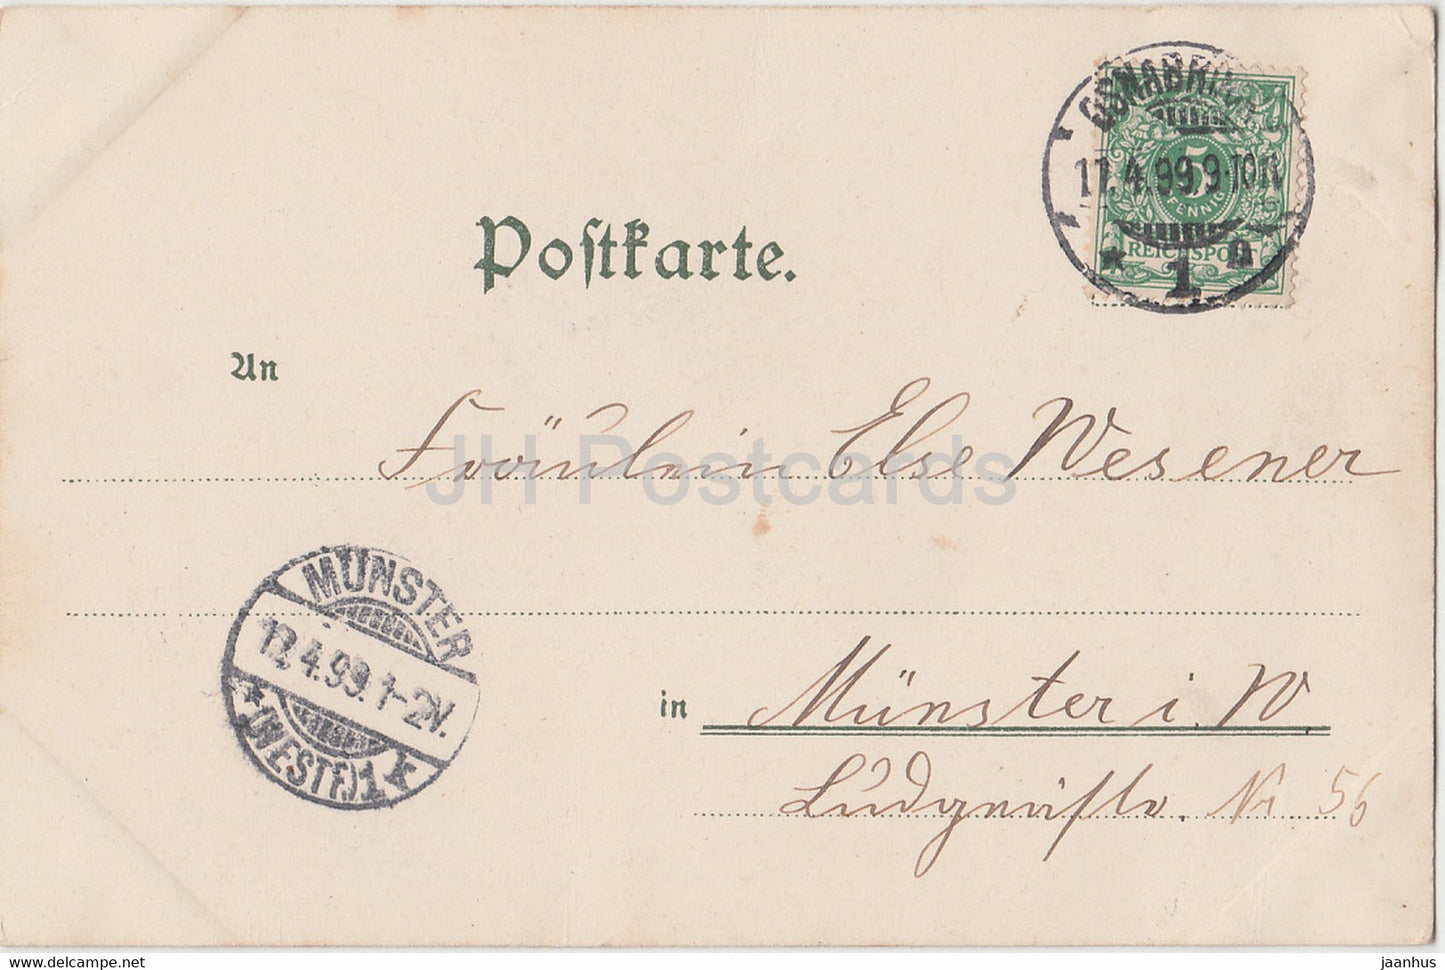 fille - chat - illustration - Serie IV - carte postale ancienne - 1899 - Allemagne - utilisé